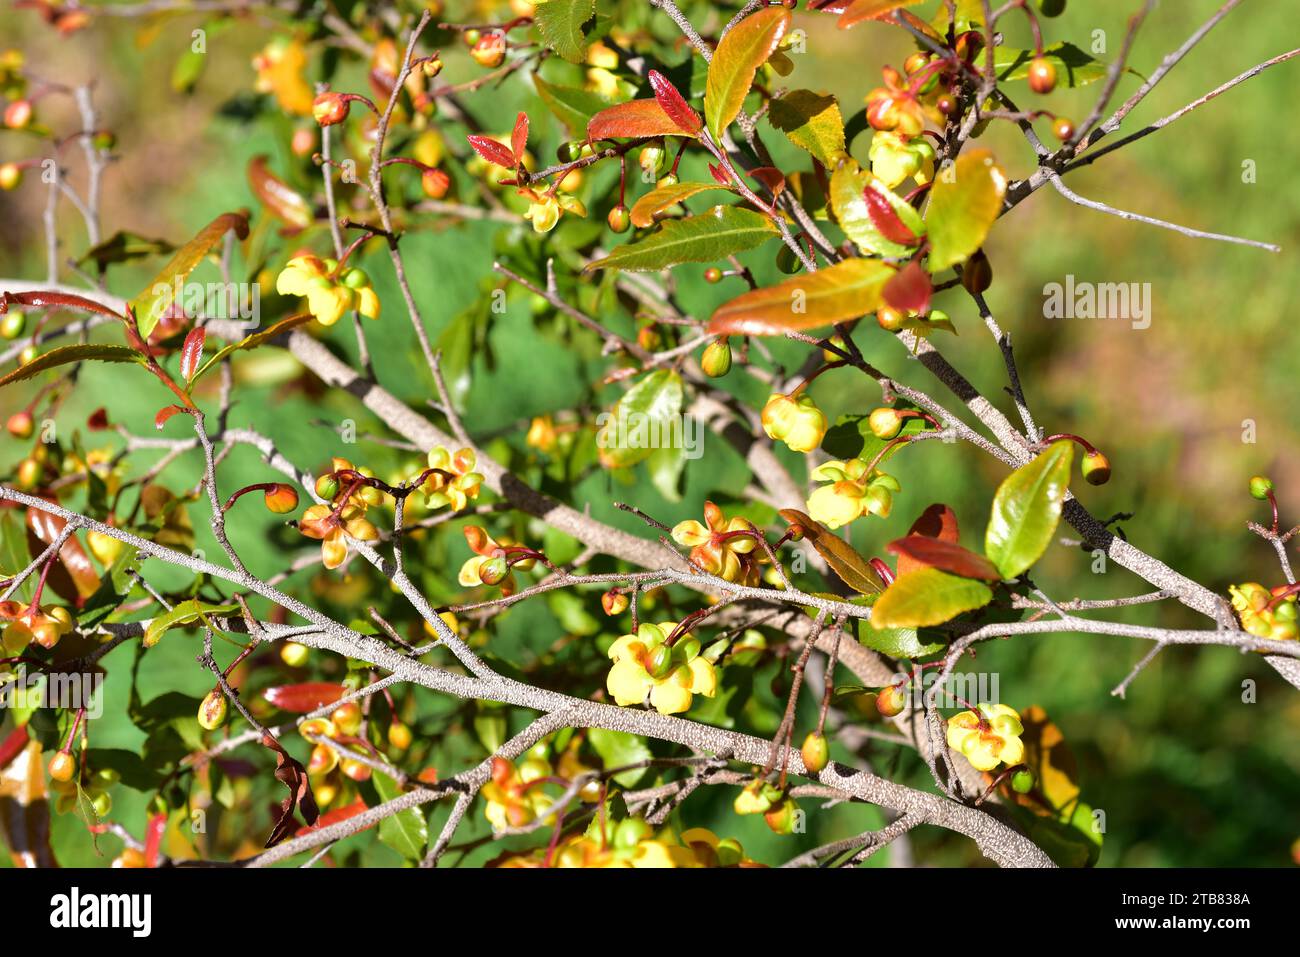 Bird's eye bush, carnival ochna or Micky Mouse bush (Ochna serrulata) is an ornamental shrub native to South Africa. Stock Photo